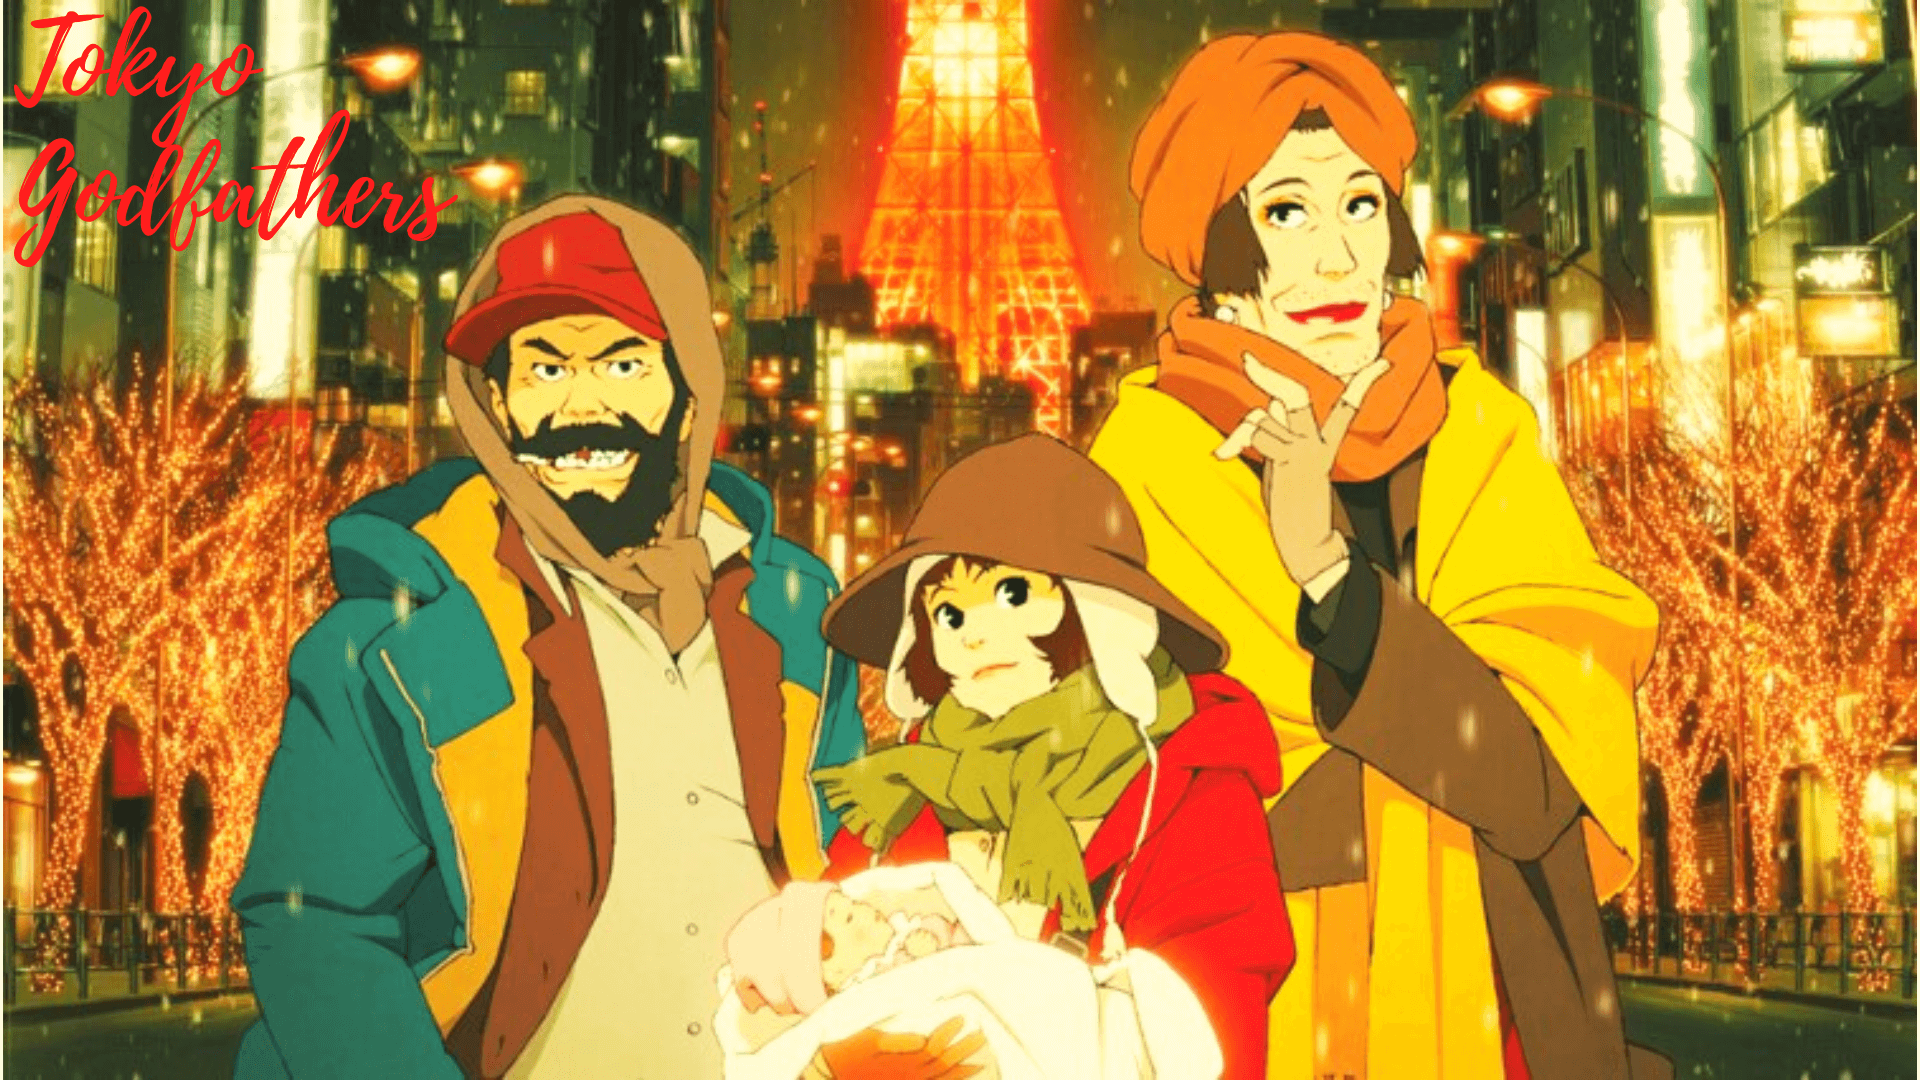 Tokyo Godfathers -The Top 10 Christmas Anime To Watch This Holiday Season